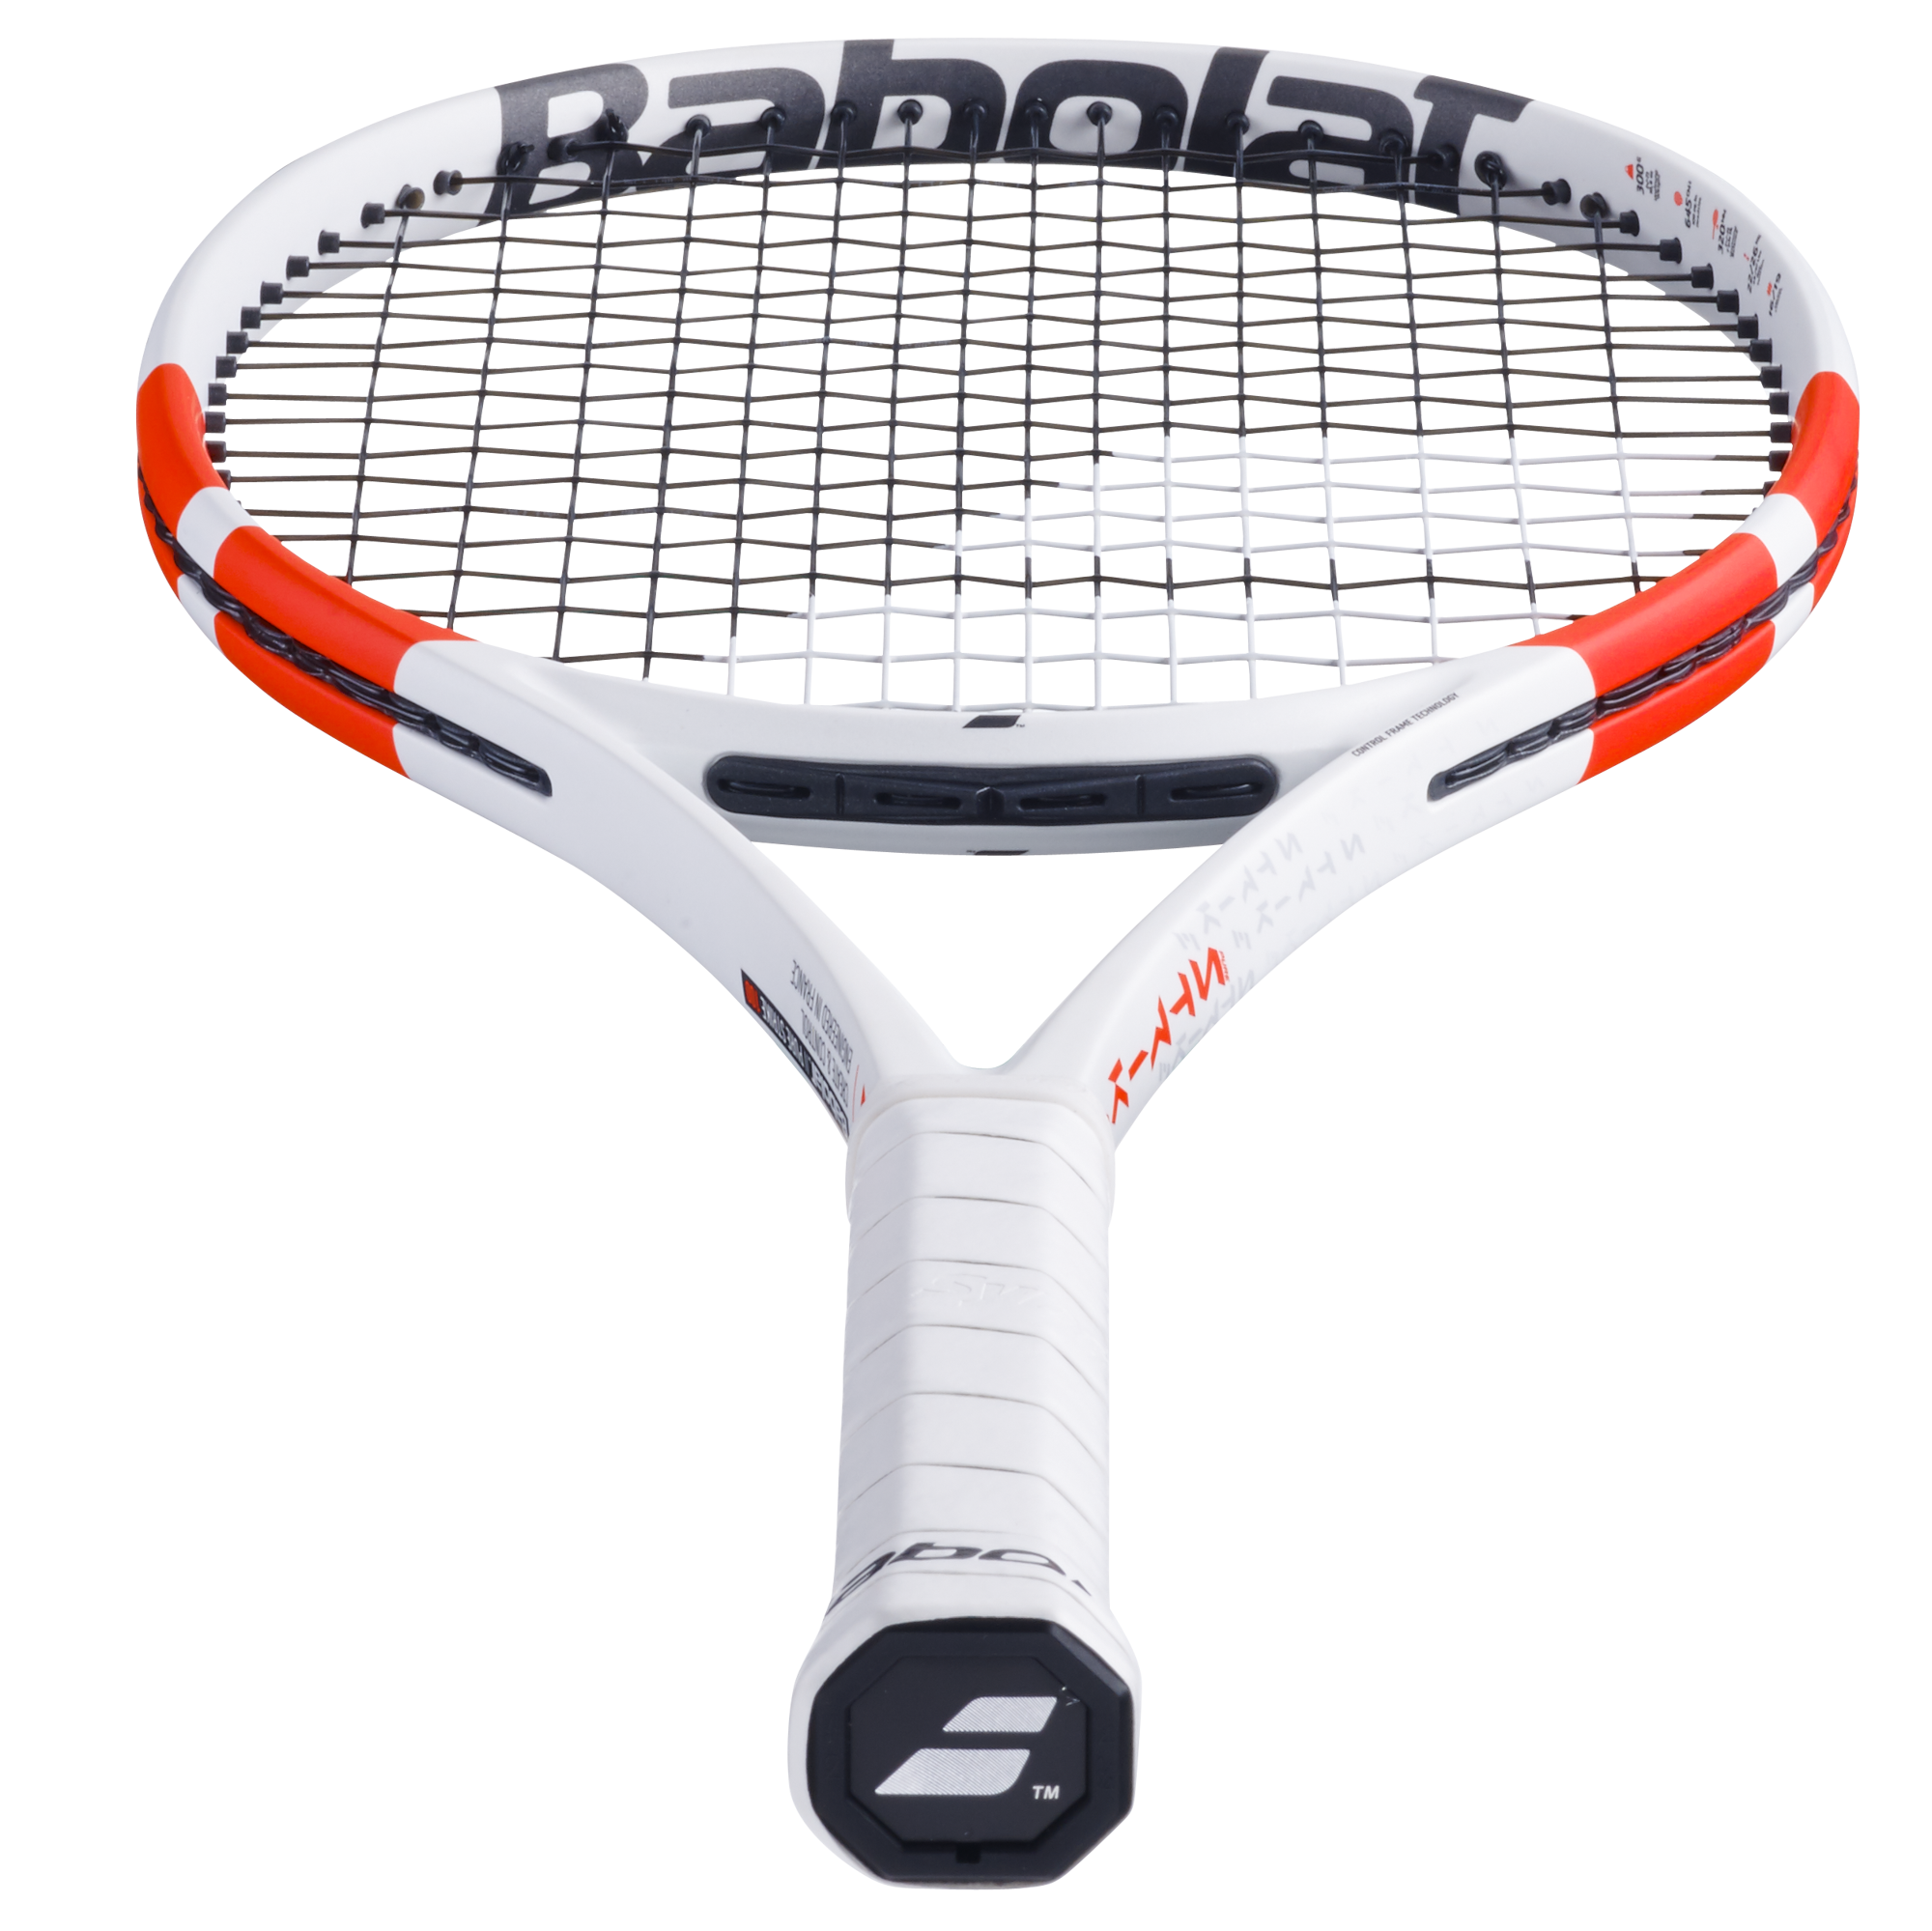 Babolat Pure Strike 100 2024 Tennis Racquet